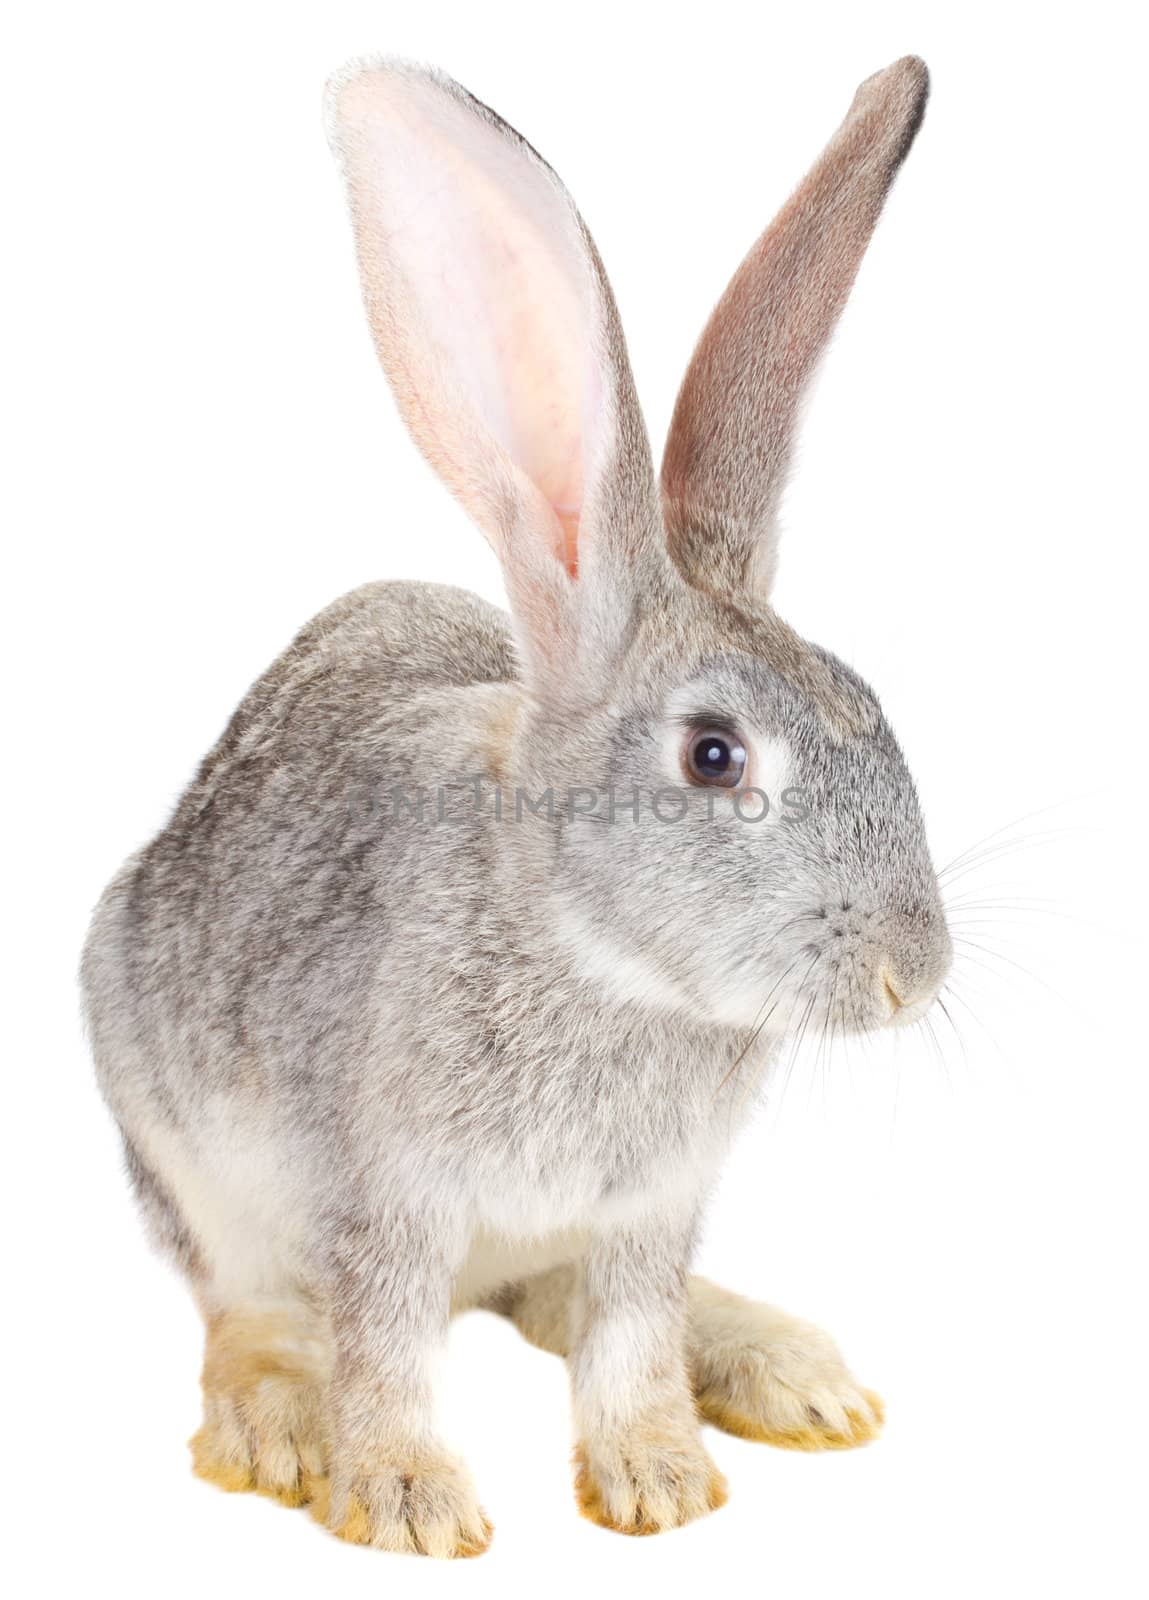 close-up rabbit, isolated on white